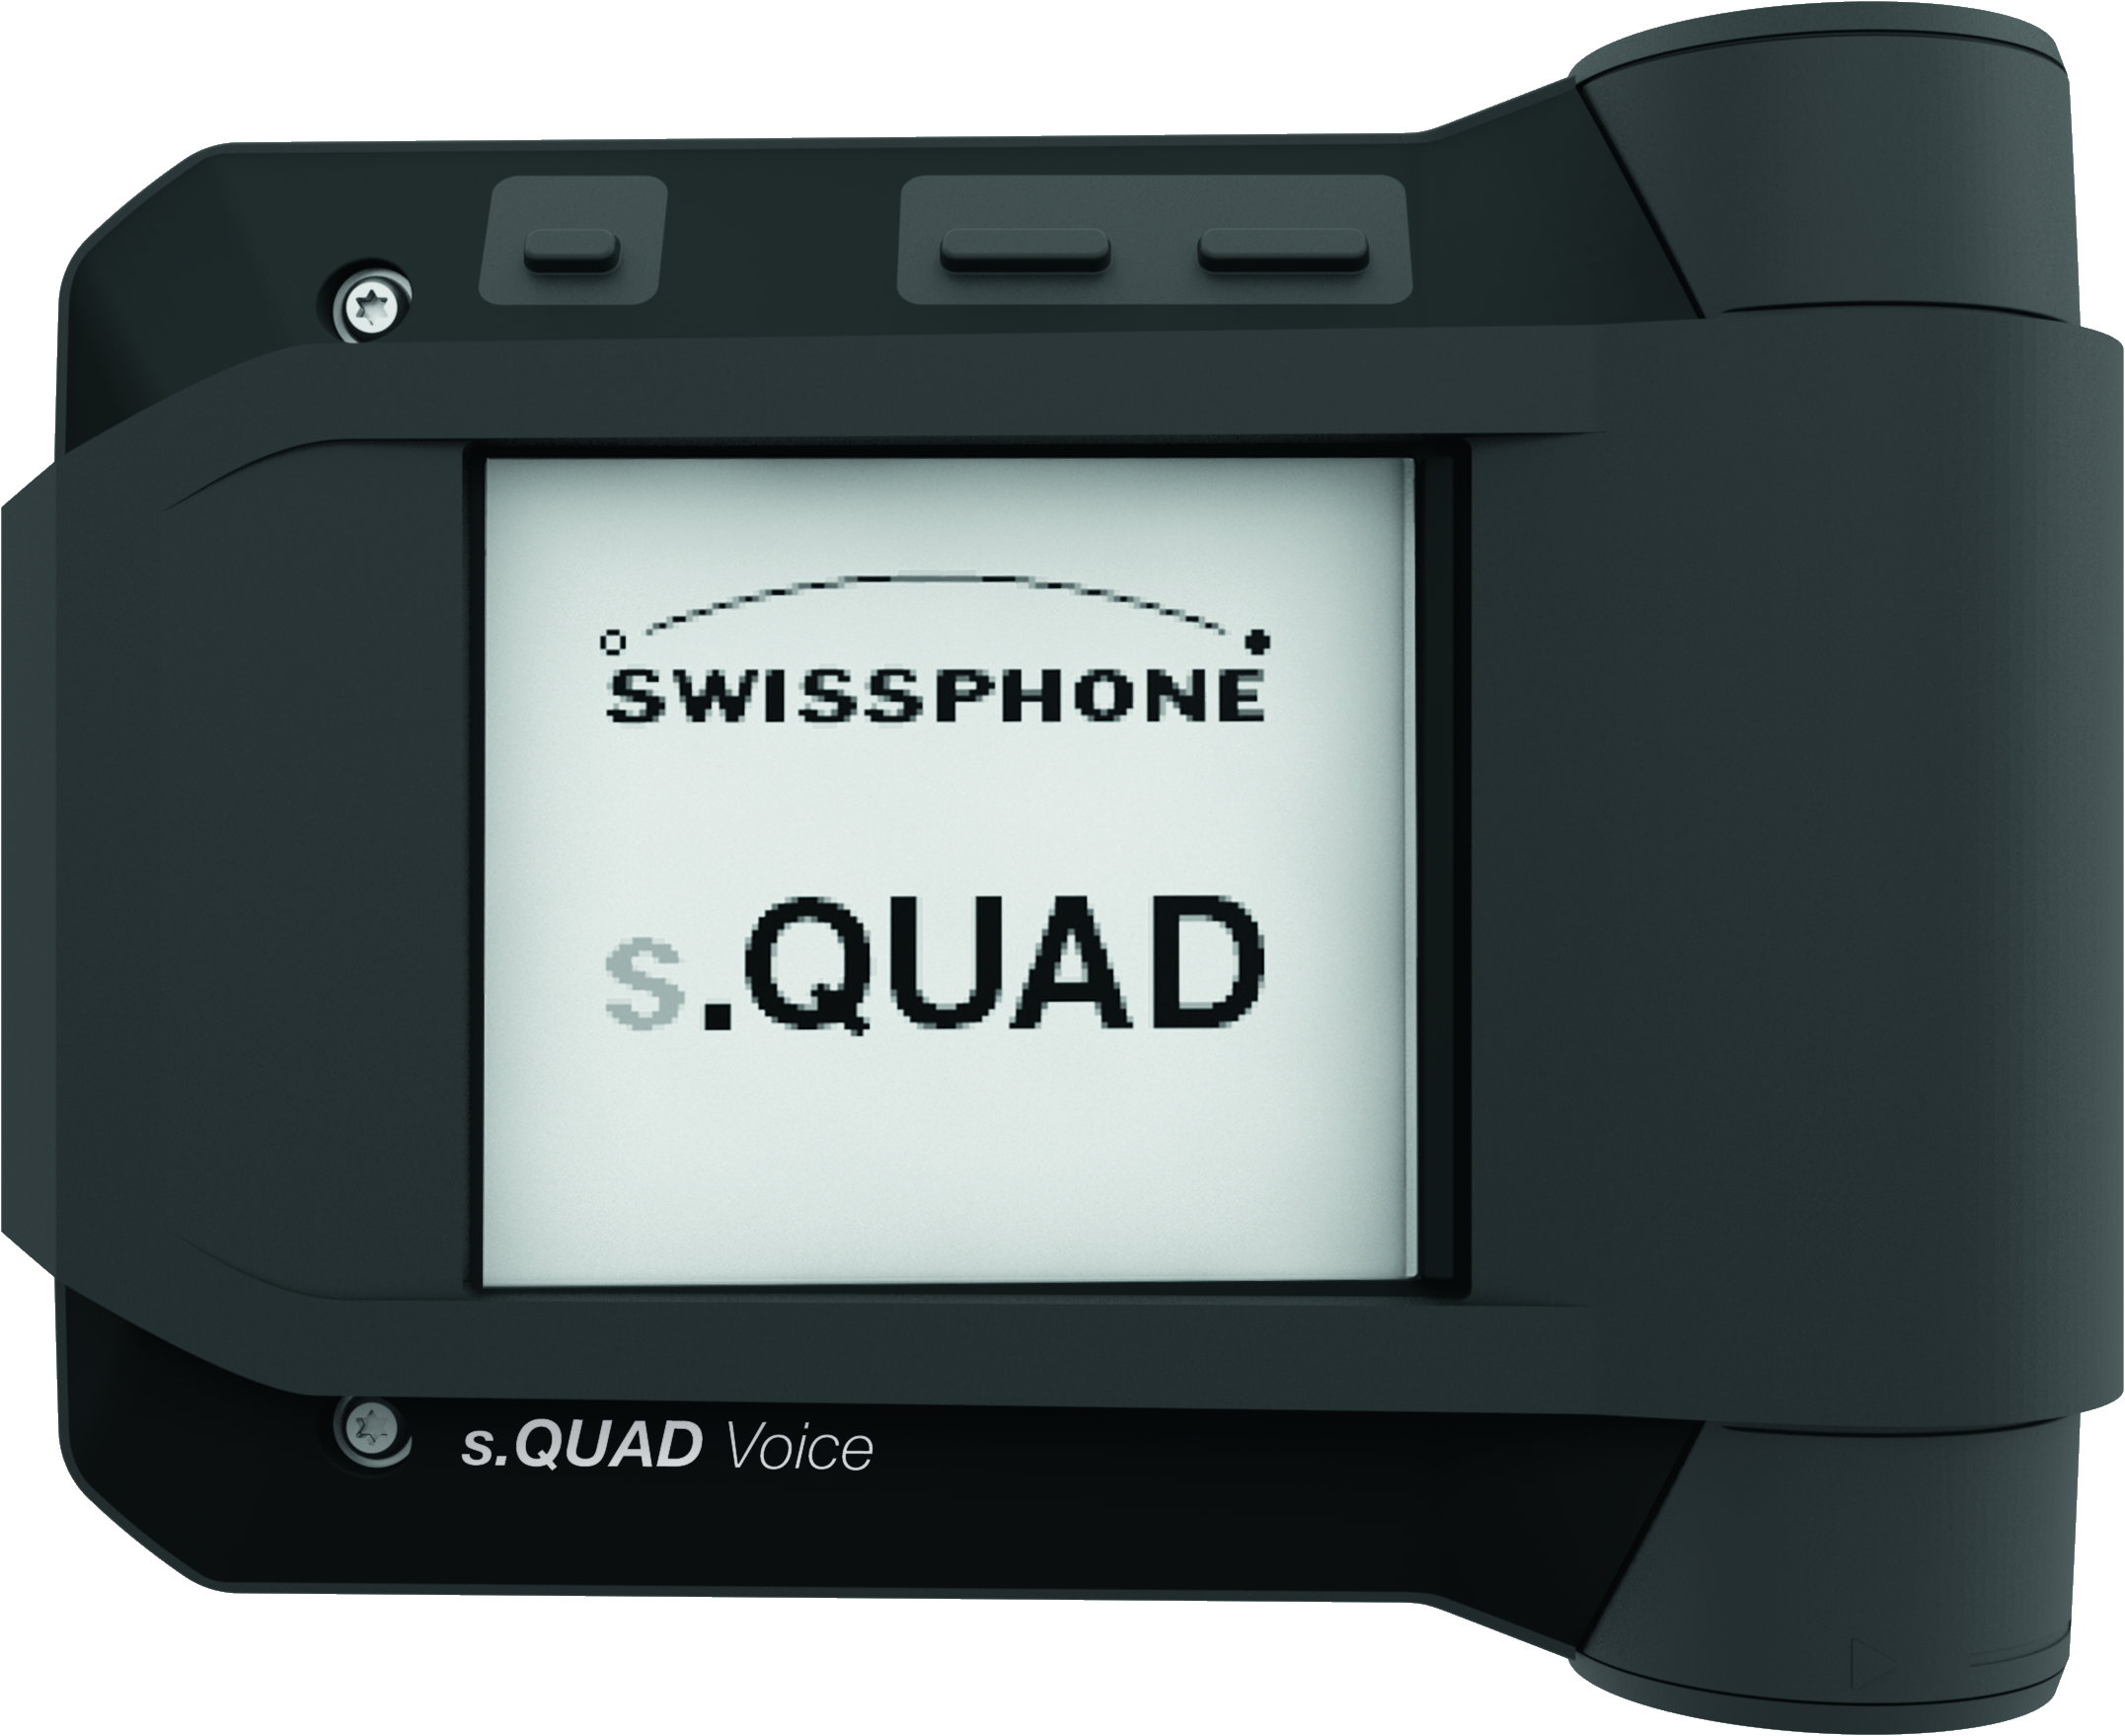 Swissphone sQuad